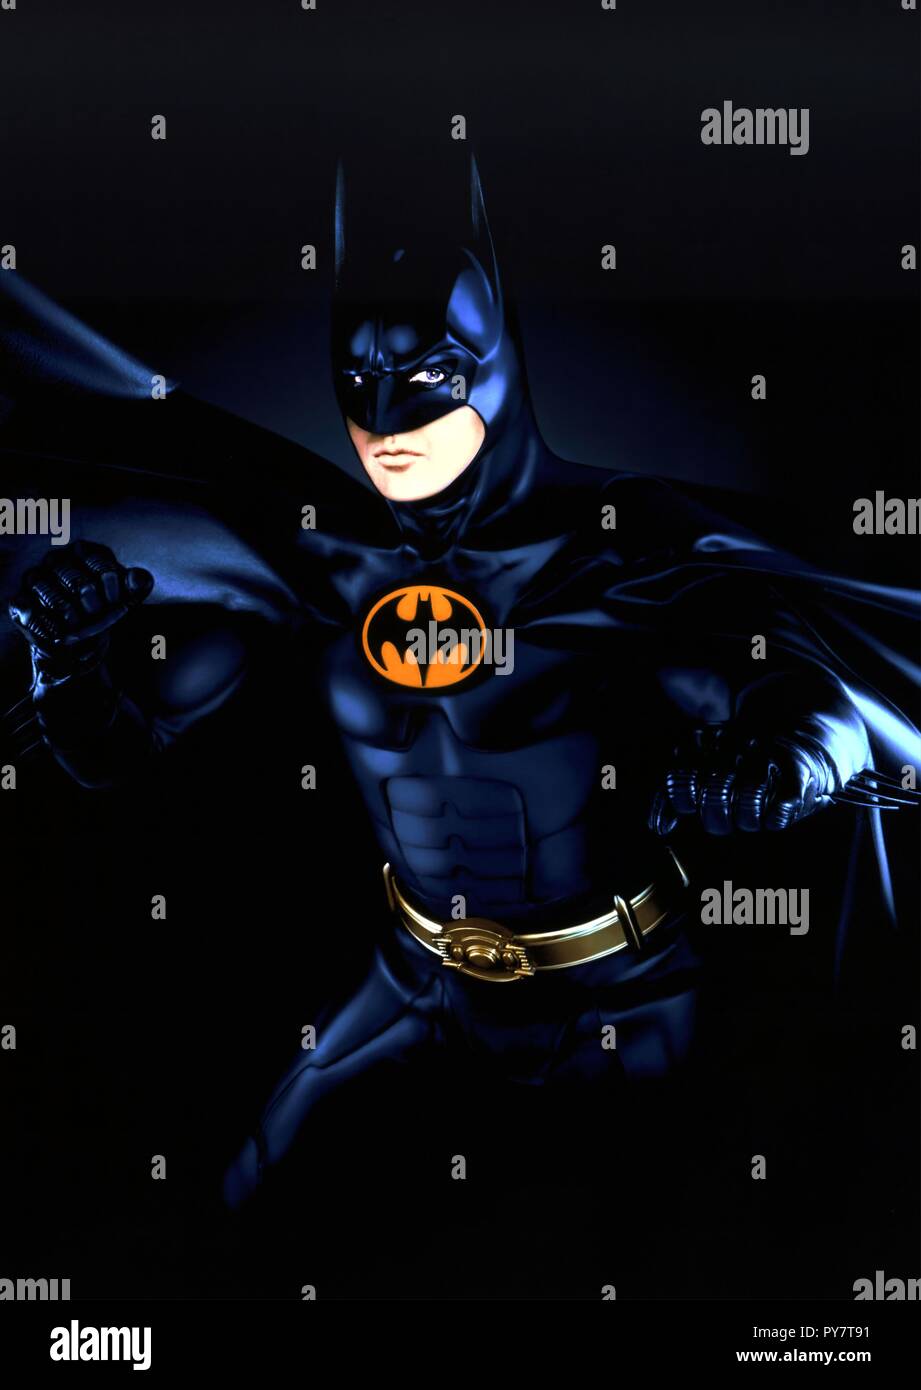 Batman returns michael keaton hi-res stock photography and images - Alamy